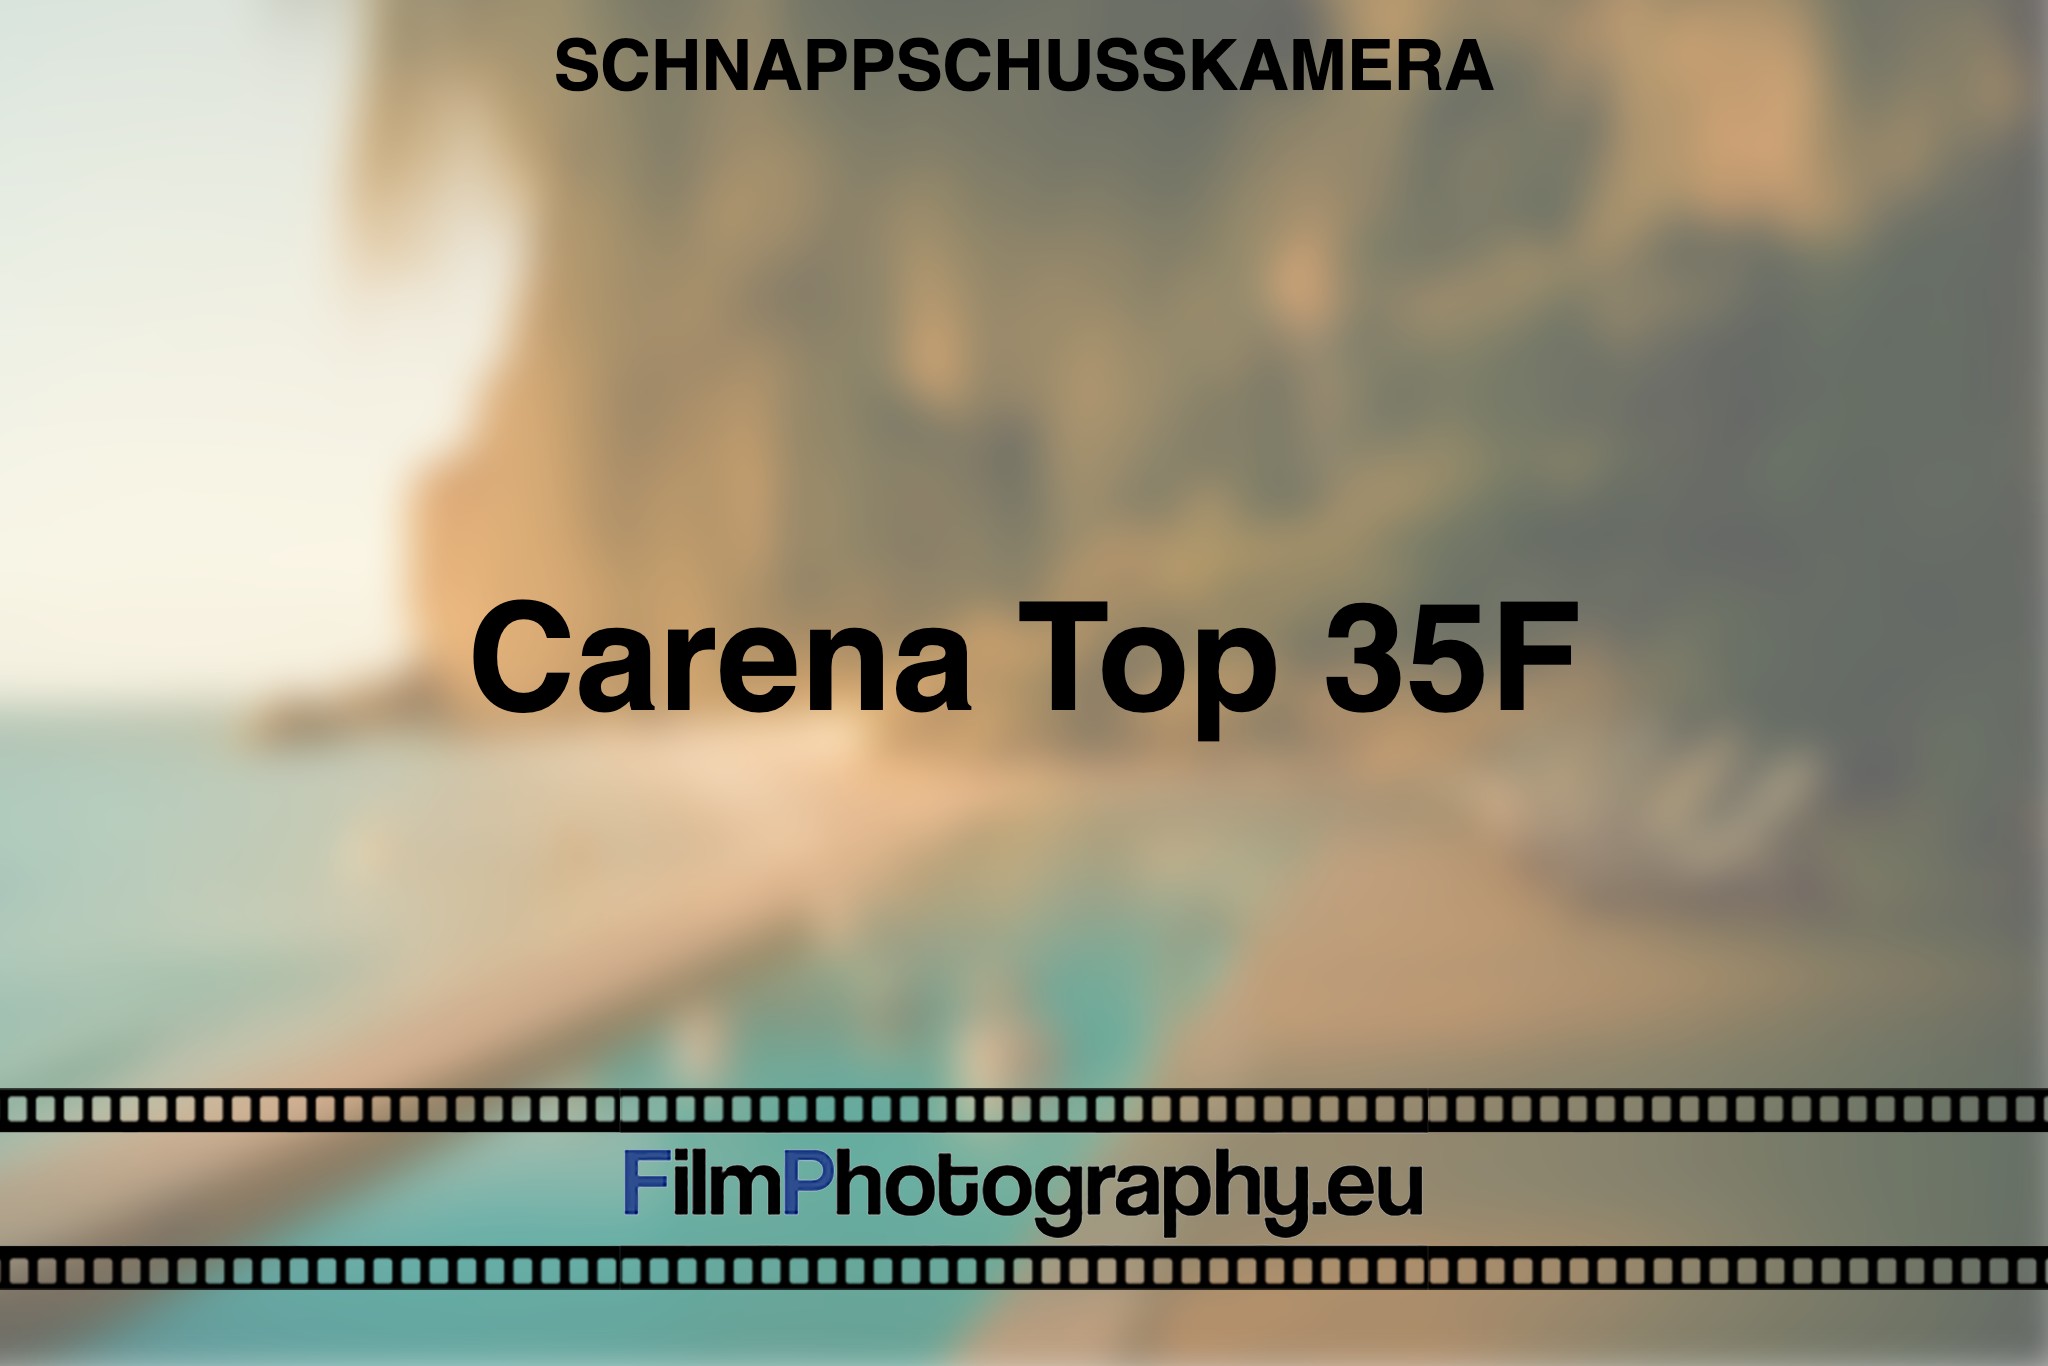 carena-top-35f-schnappschusskamera-bnv